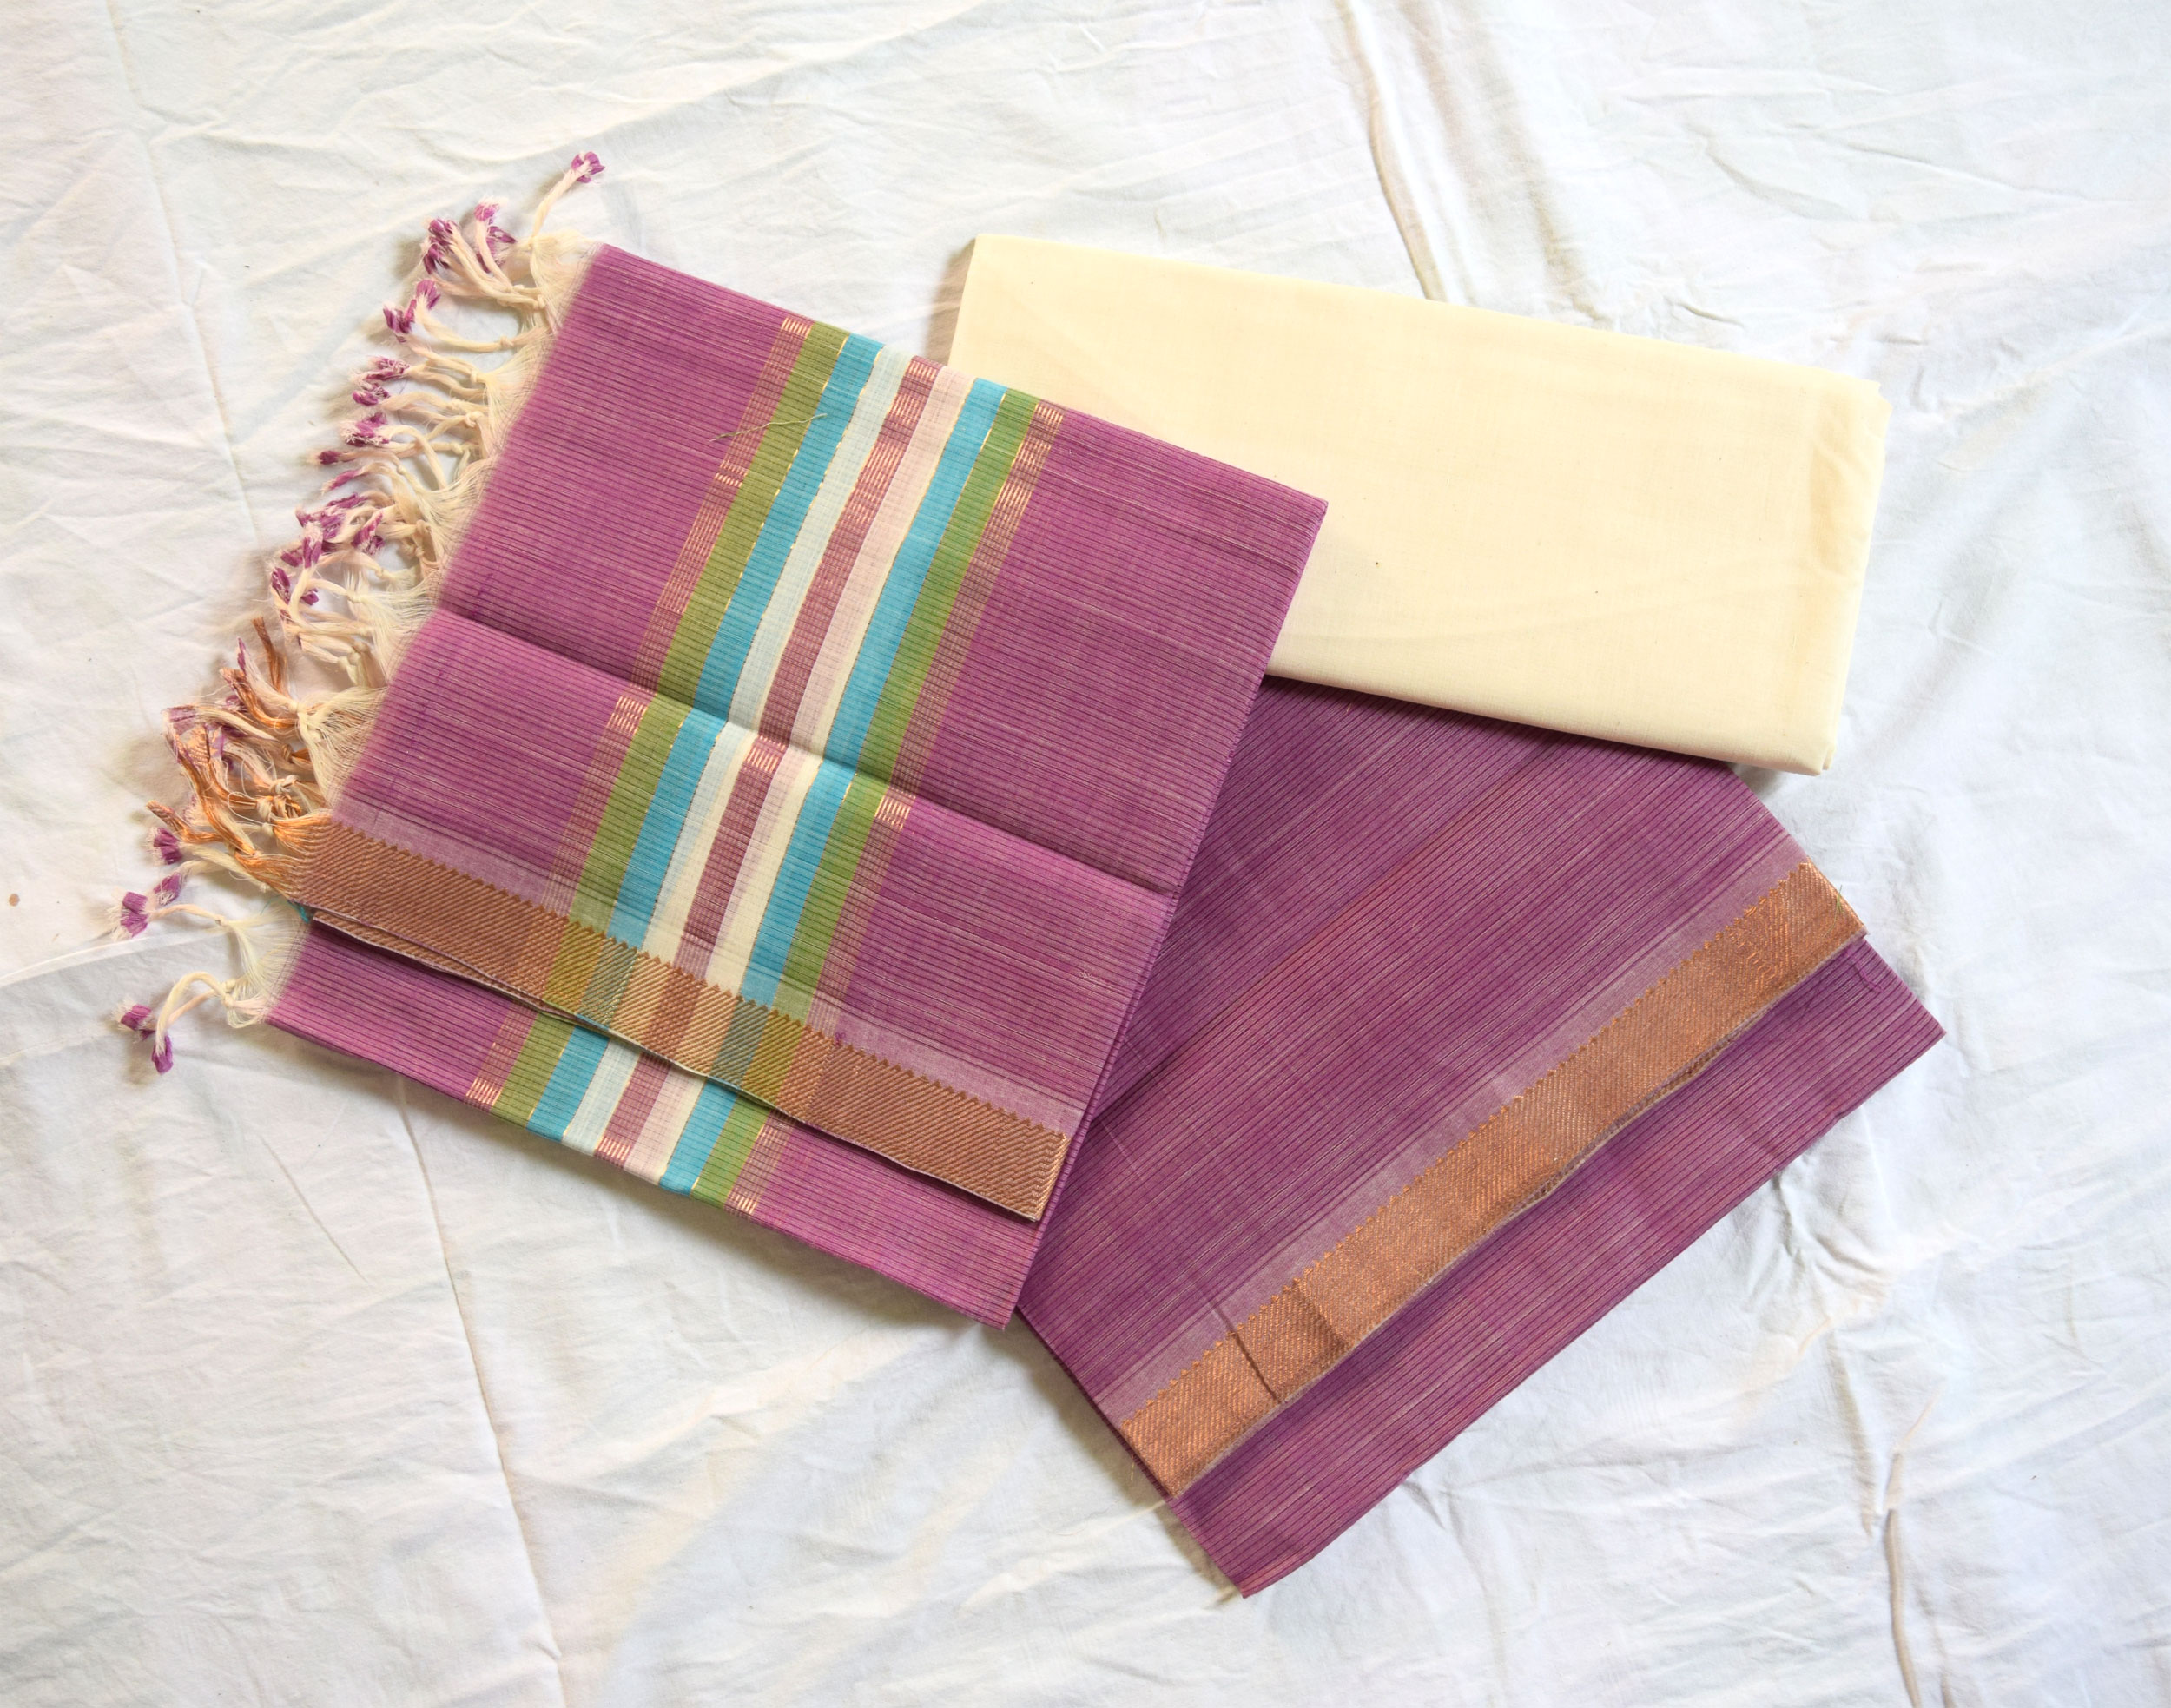 Mangalagiri light purple Color Cotton Dress material-5